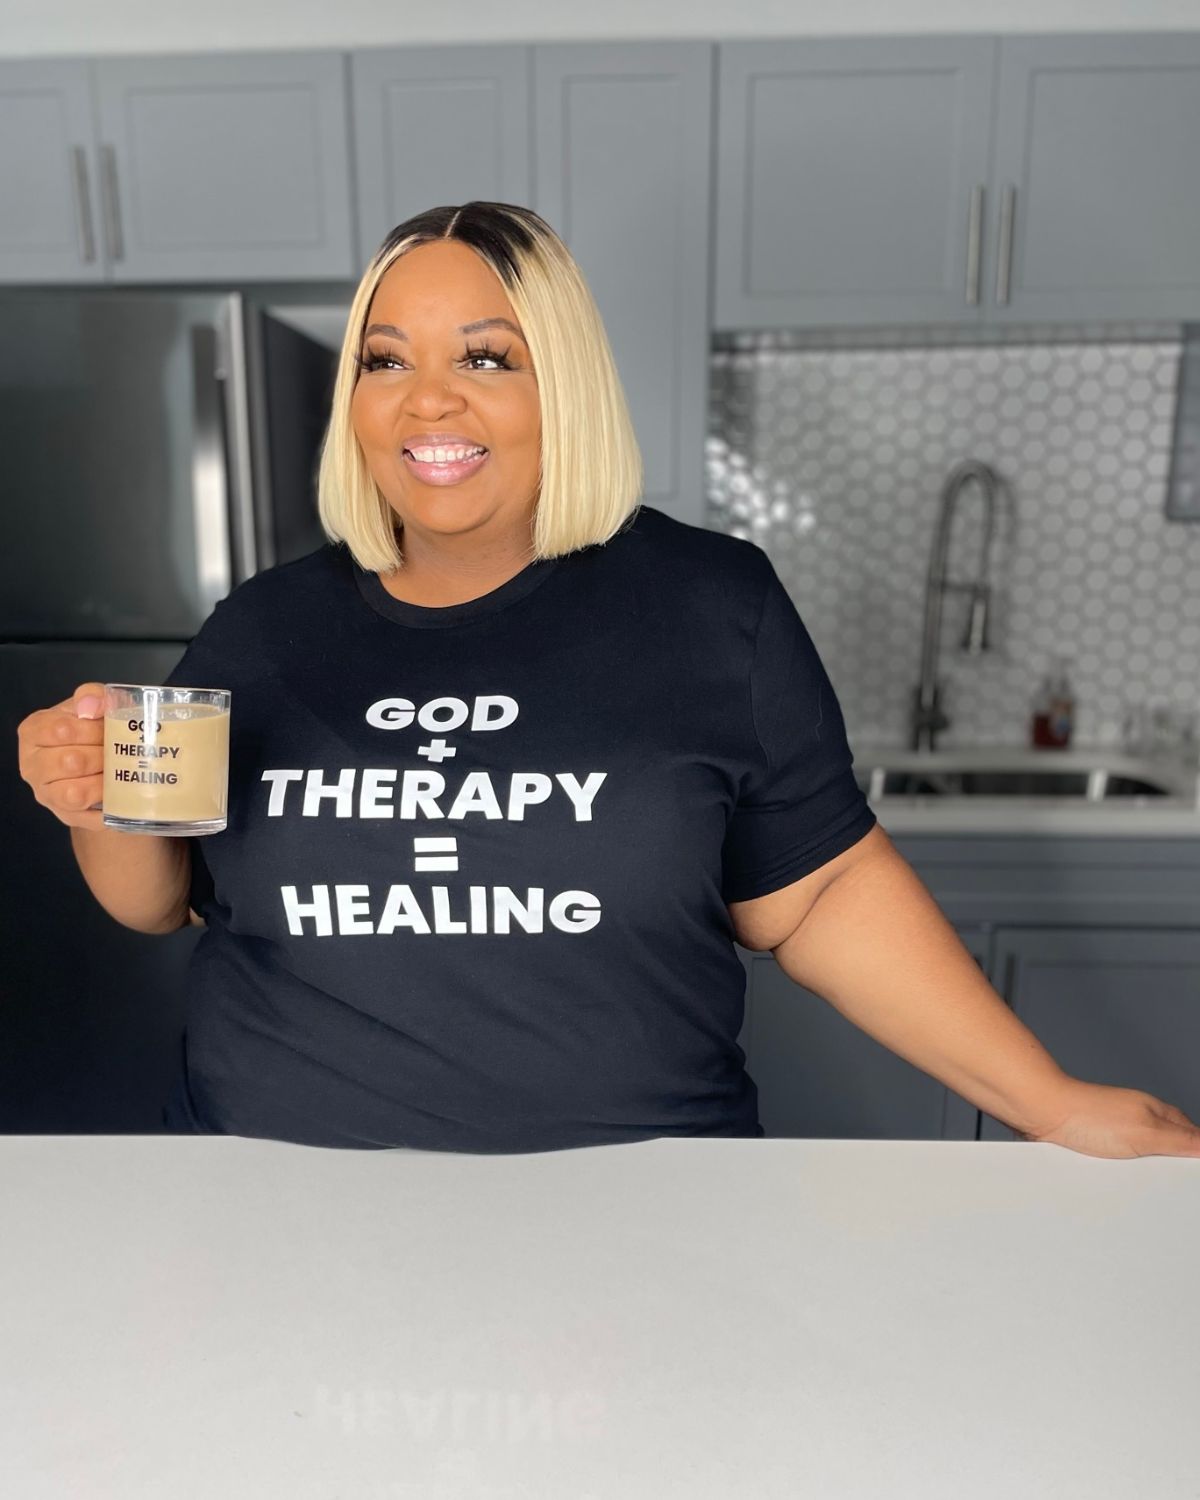 God, Therapy, Healing T-Shirt